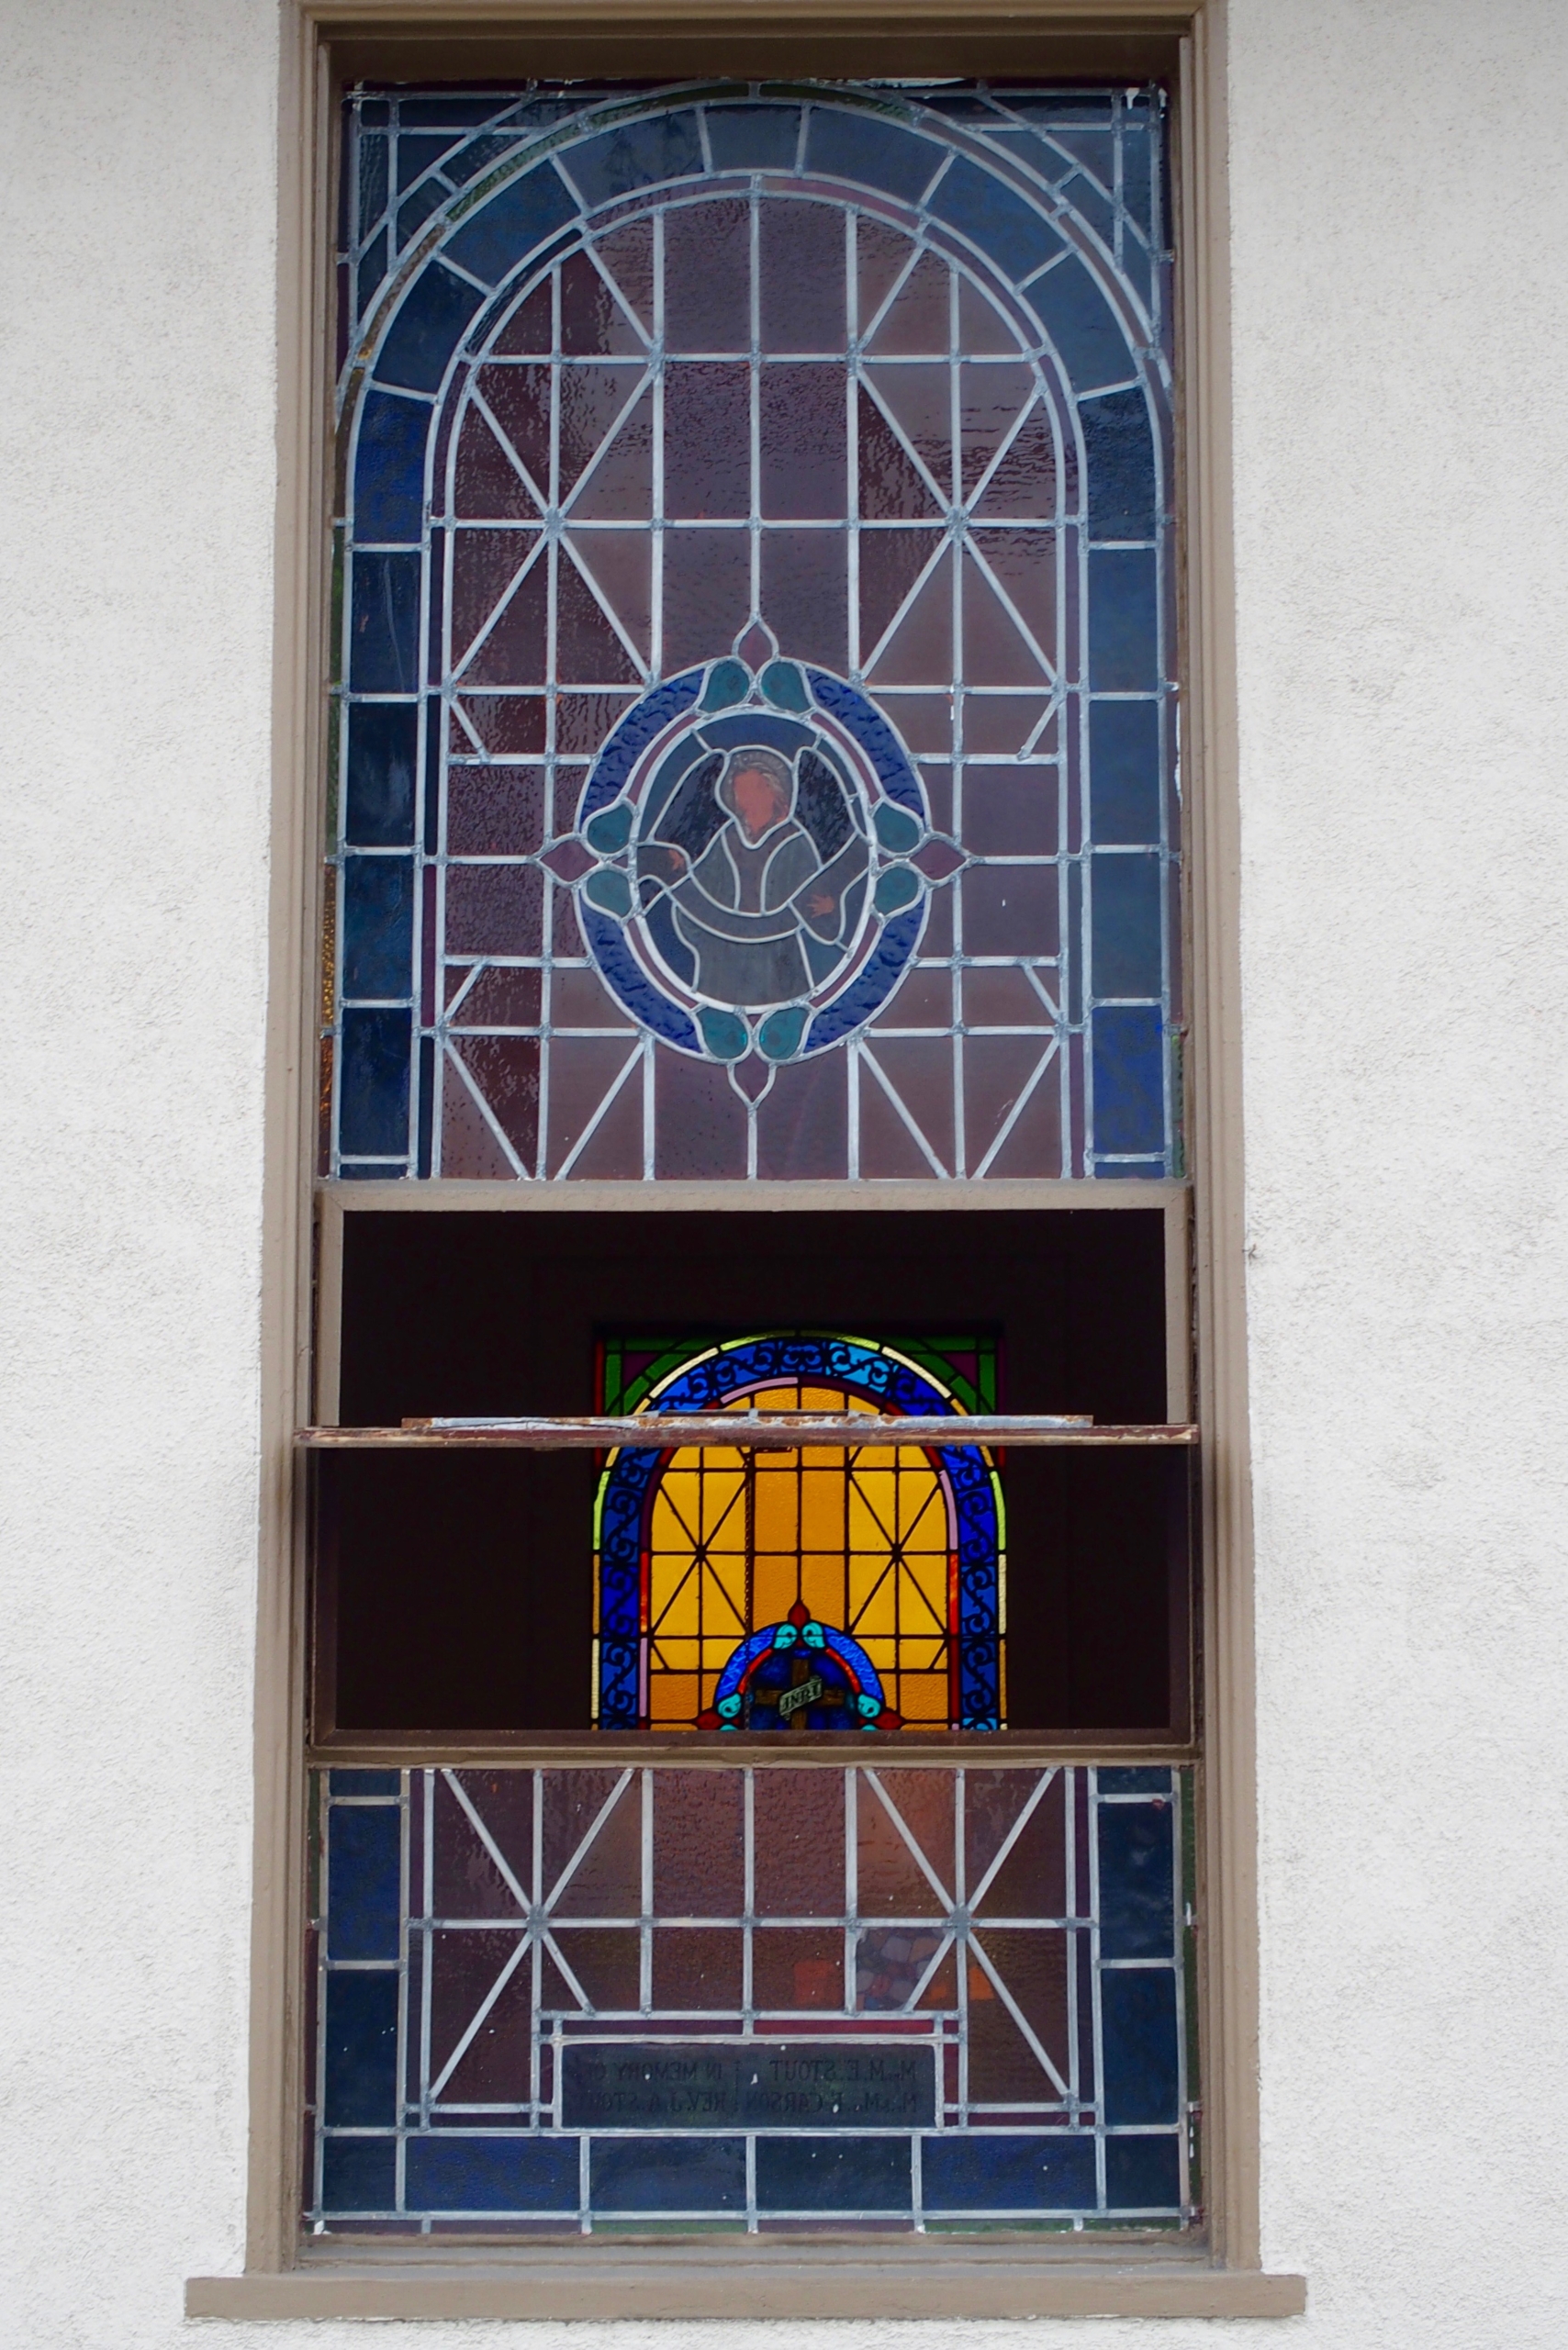 Phillips Chapel Christian Methodist Episcopal (Cme) Church | Santa Monica Conservancy